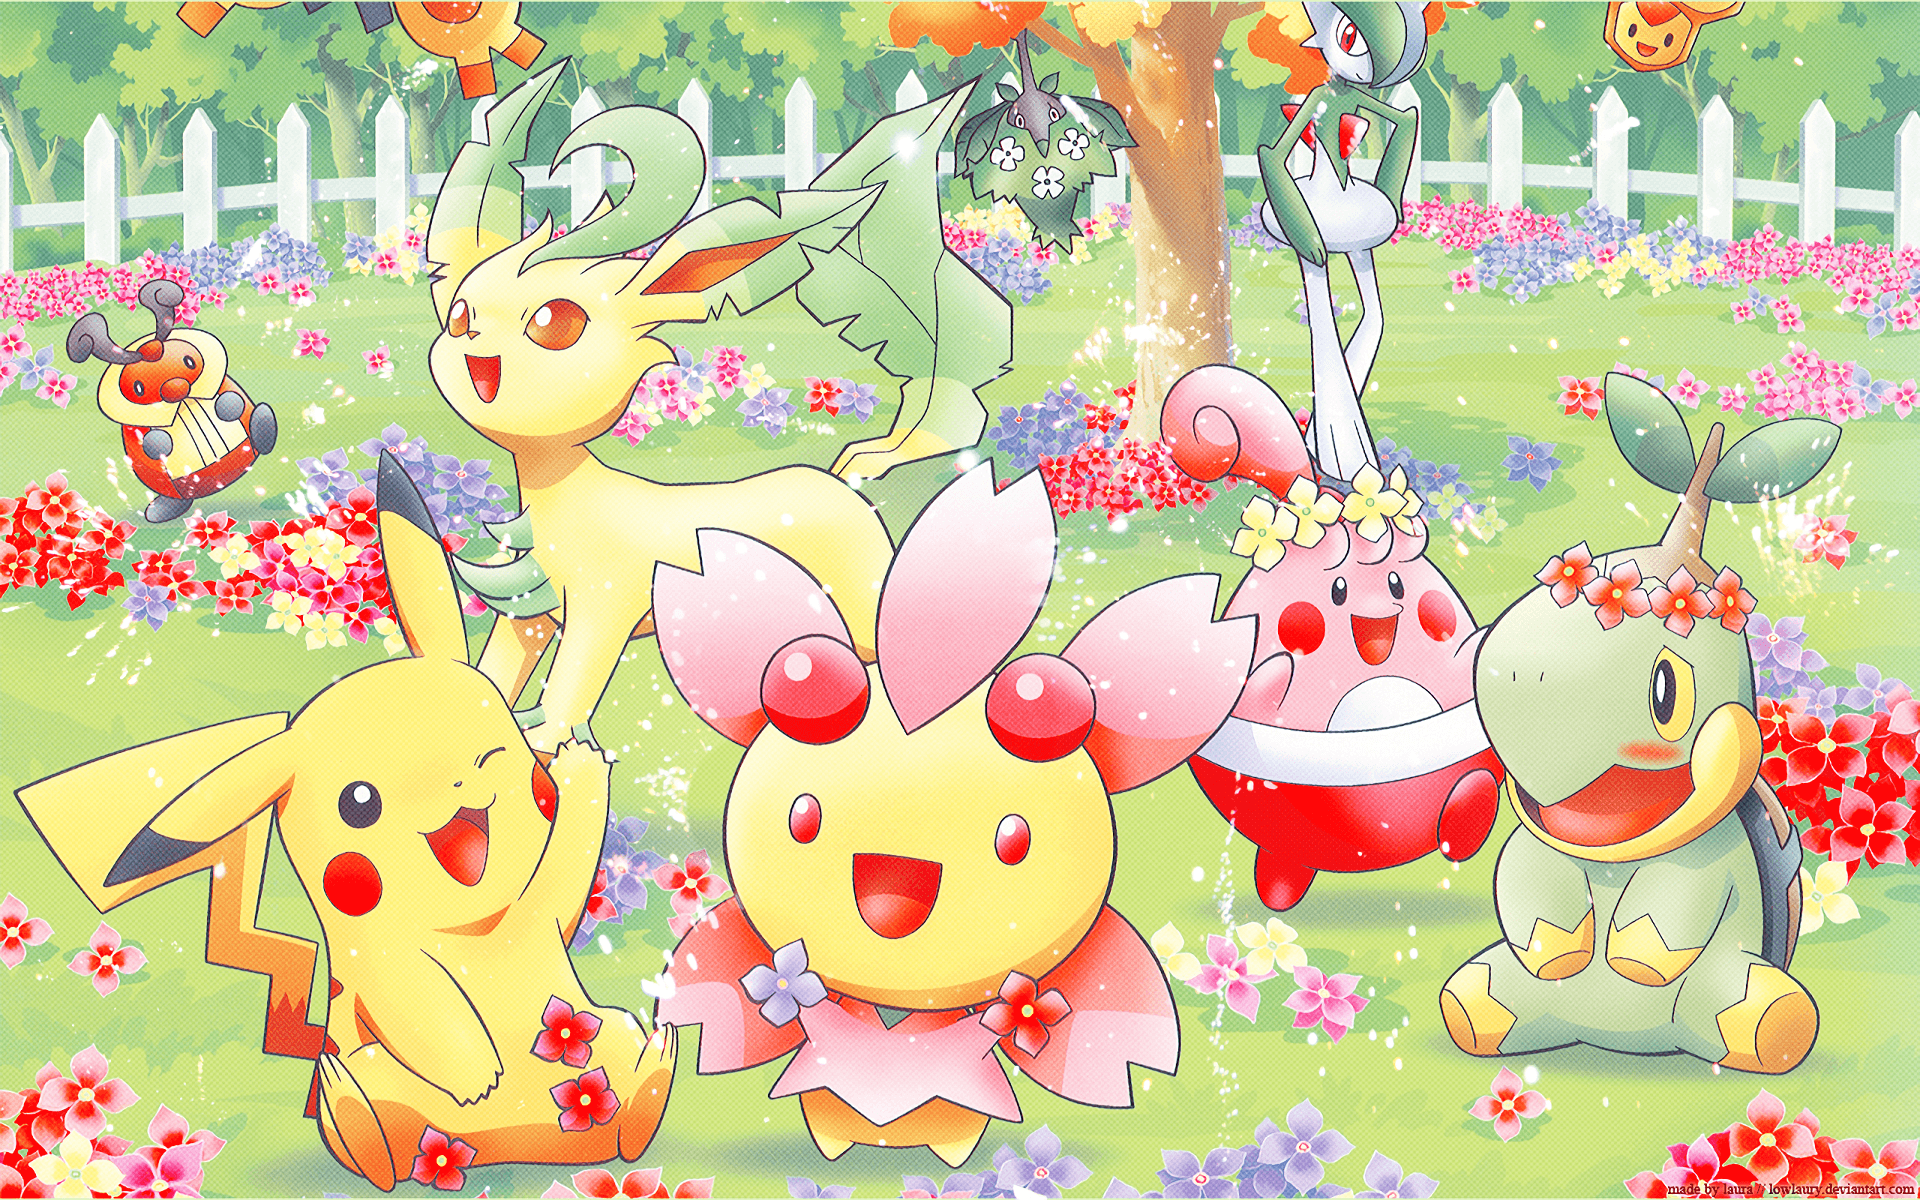 Cherrim (Pokémon) HD Wallpaper and Background Image